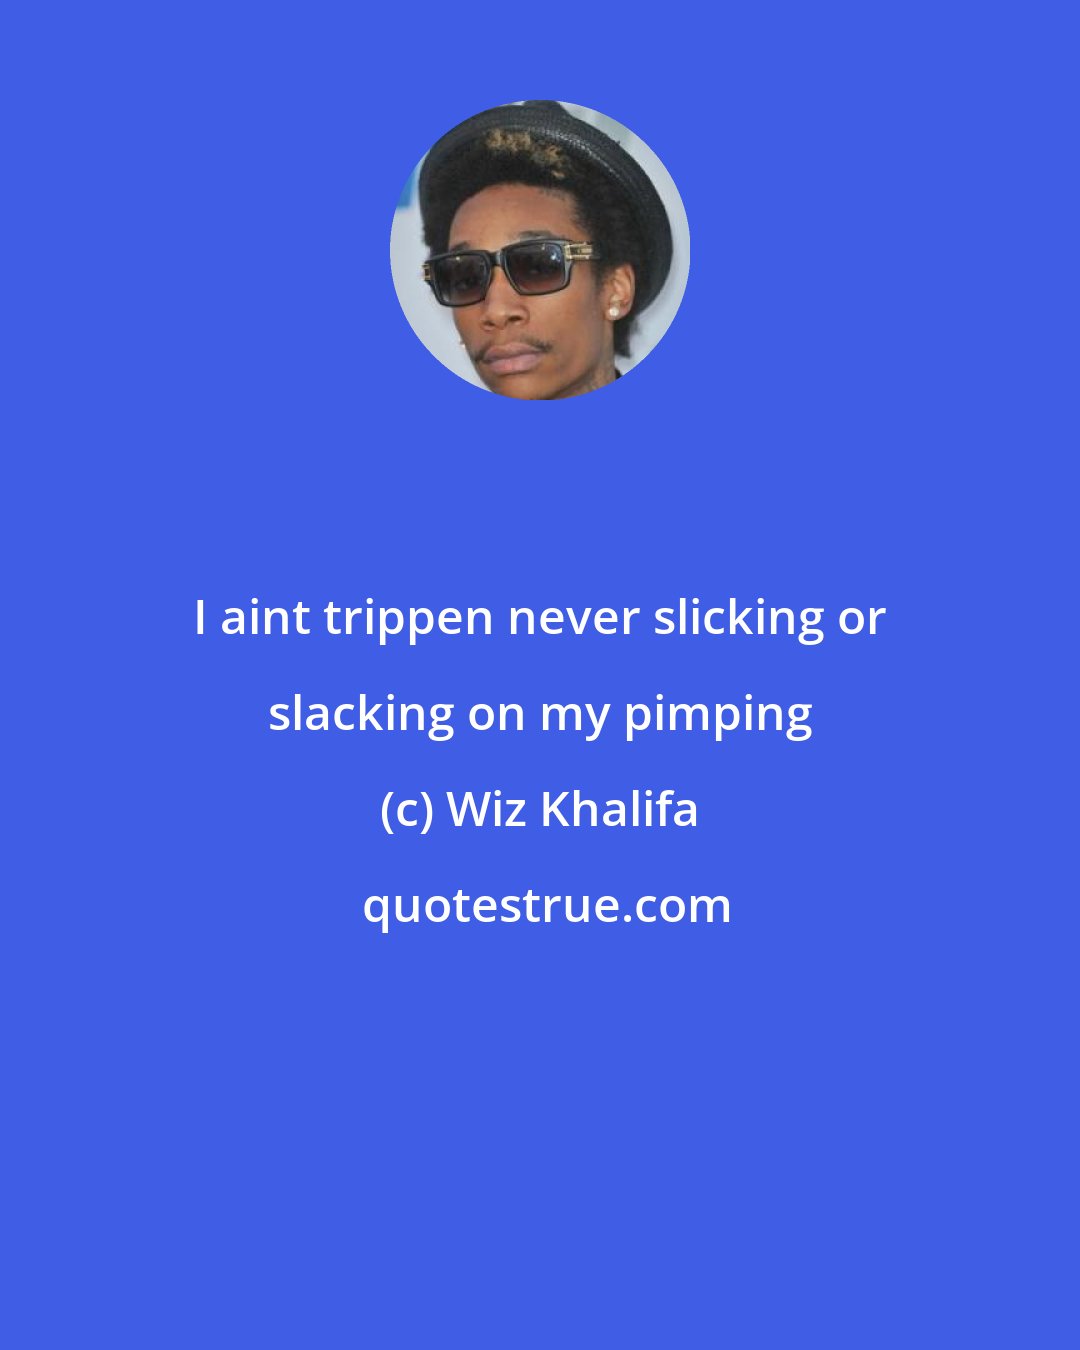 Wiz Khalifa: I aint trippen never slicking or slacking on my pimping